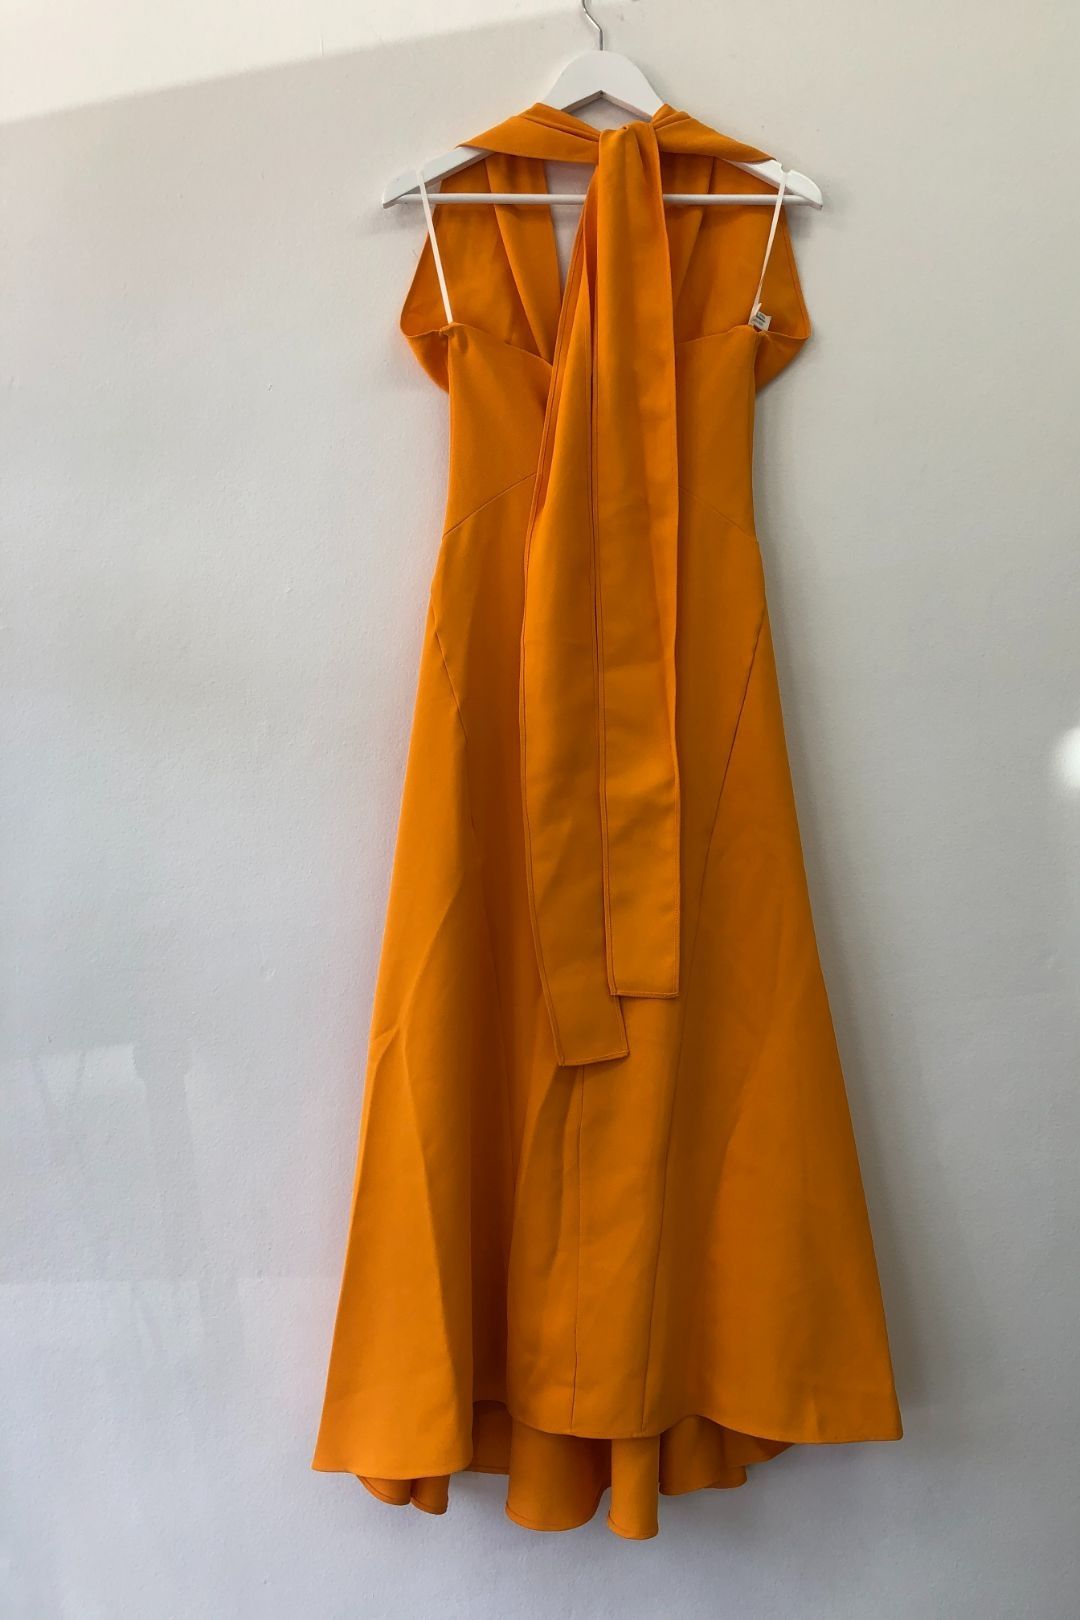 By Johnny - Zina Halter Orange Midi Dress